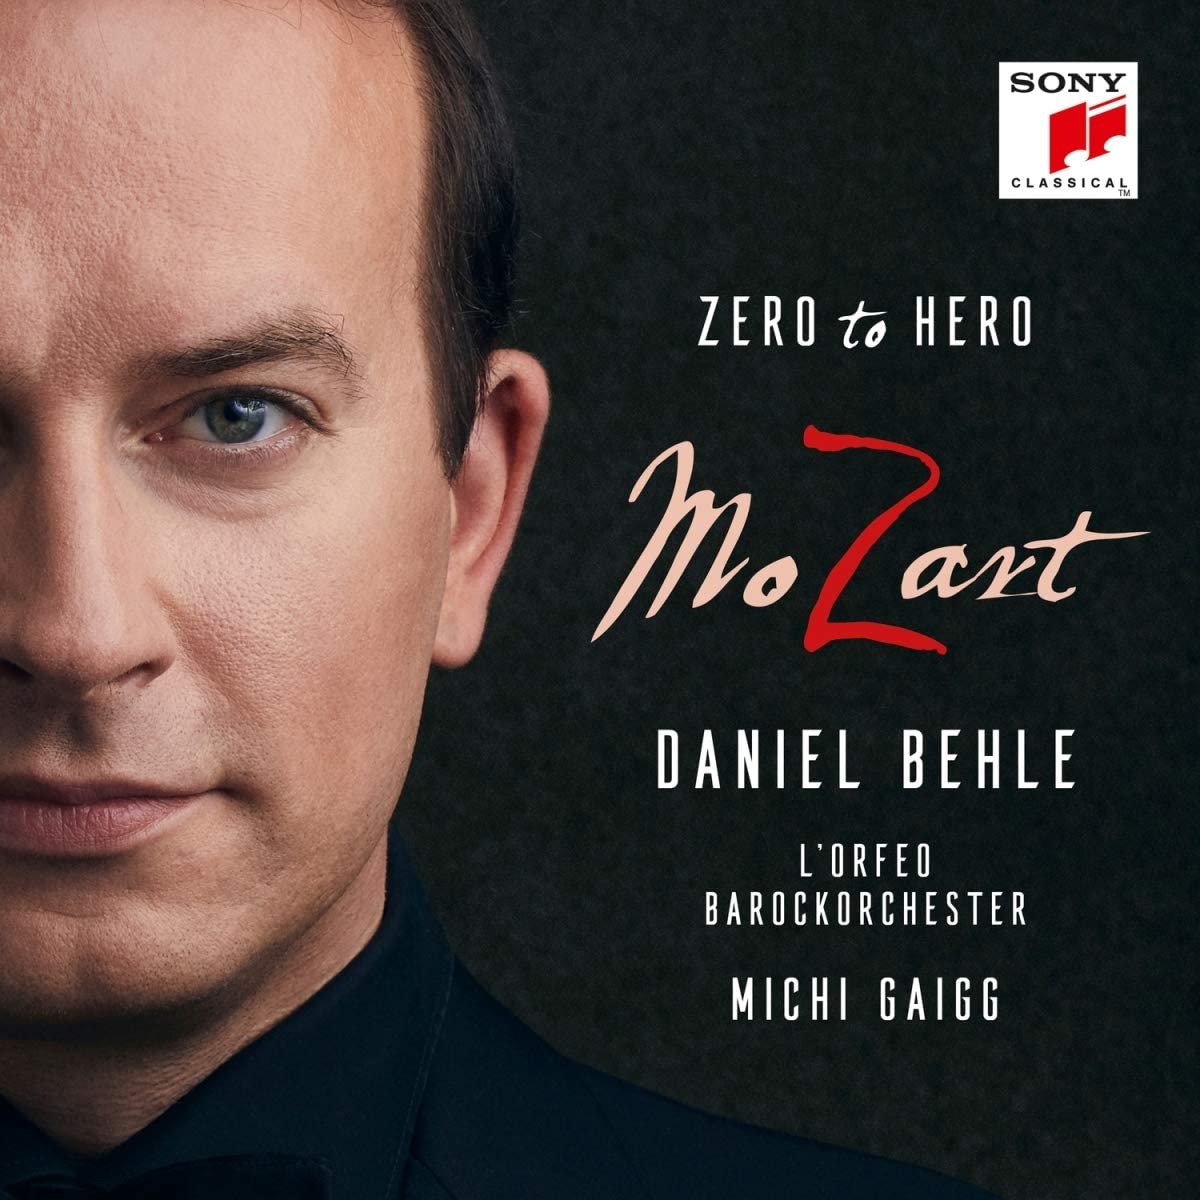 CD cover of David Behle Mozart Hero to zero